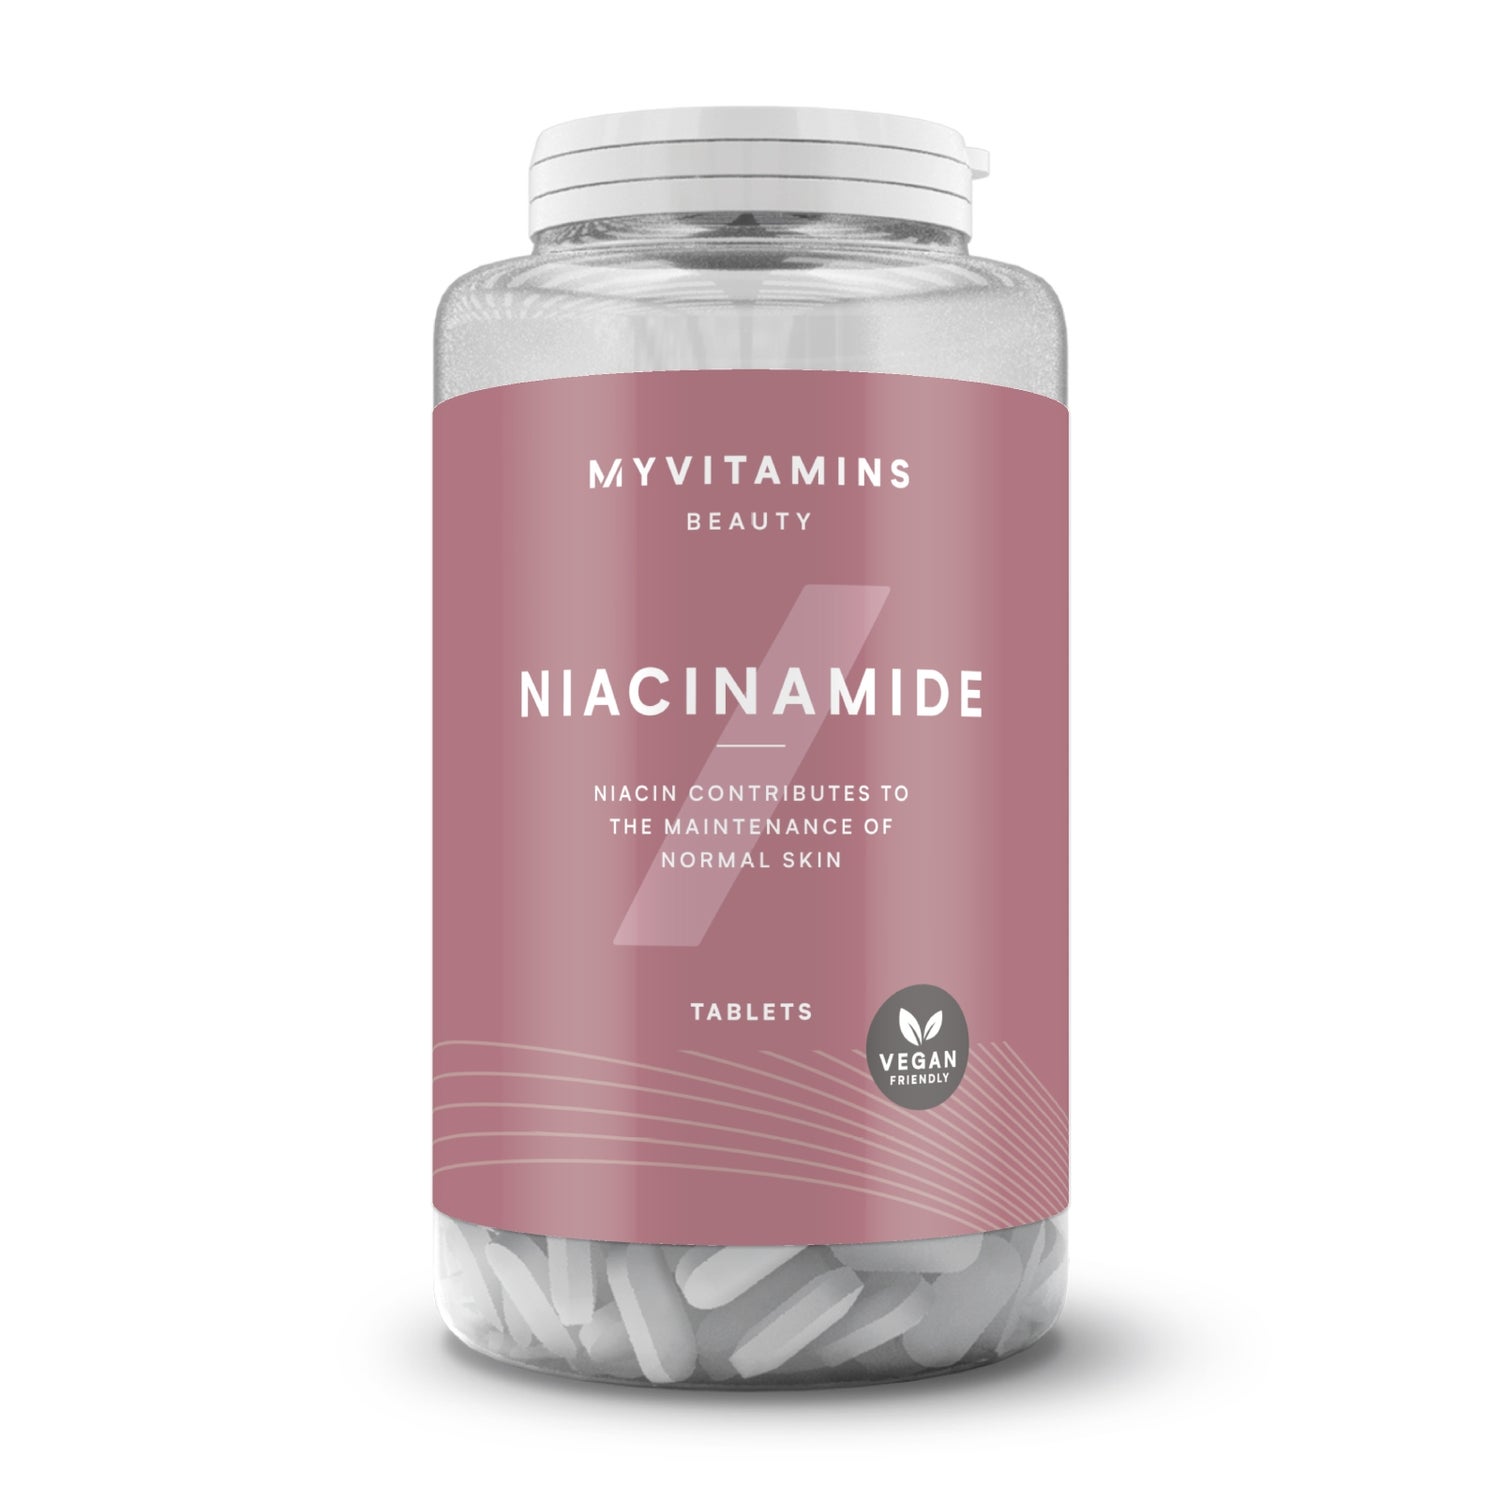 Myvitamins Niacinamide Tablets